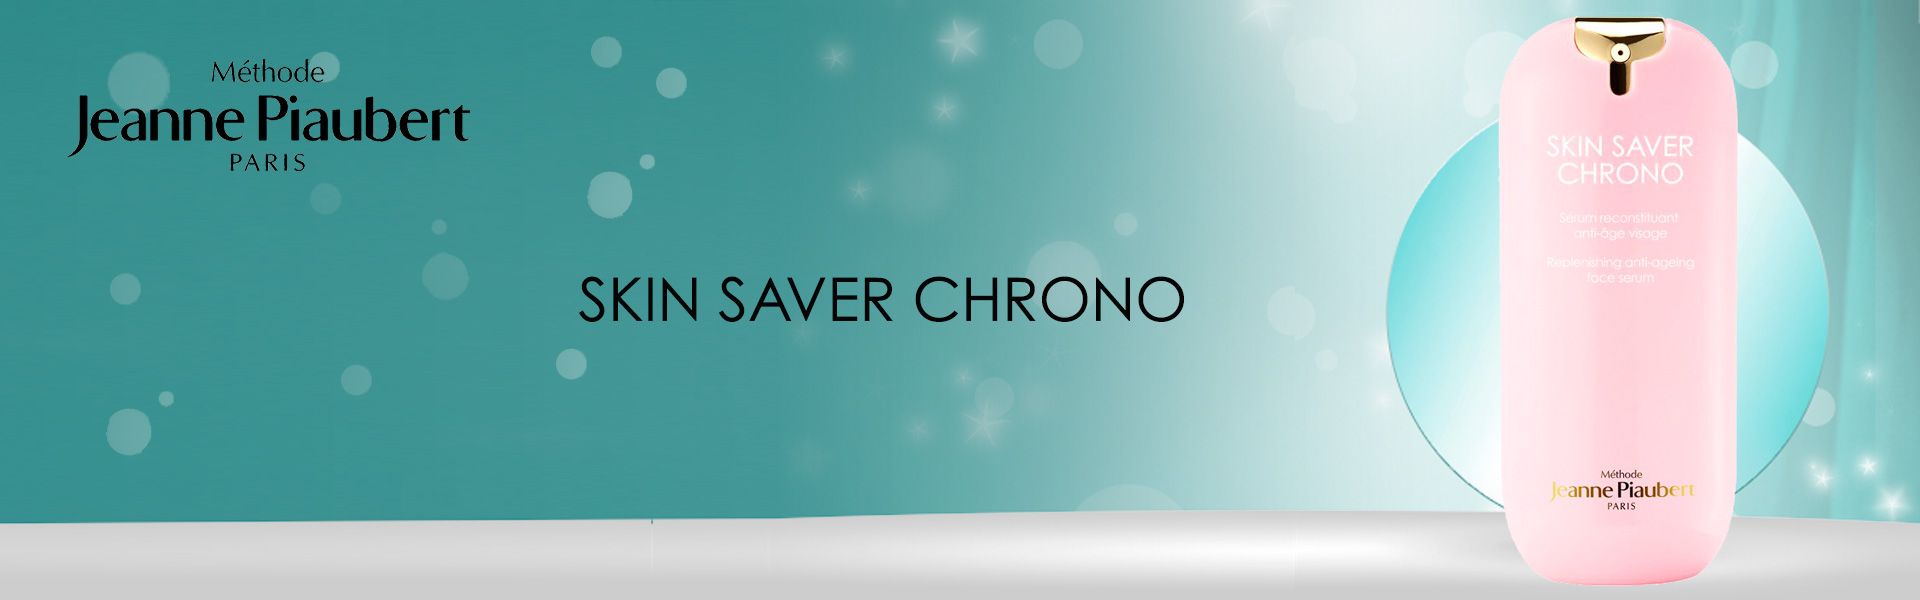 Skin Saver Chrono